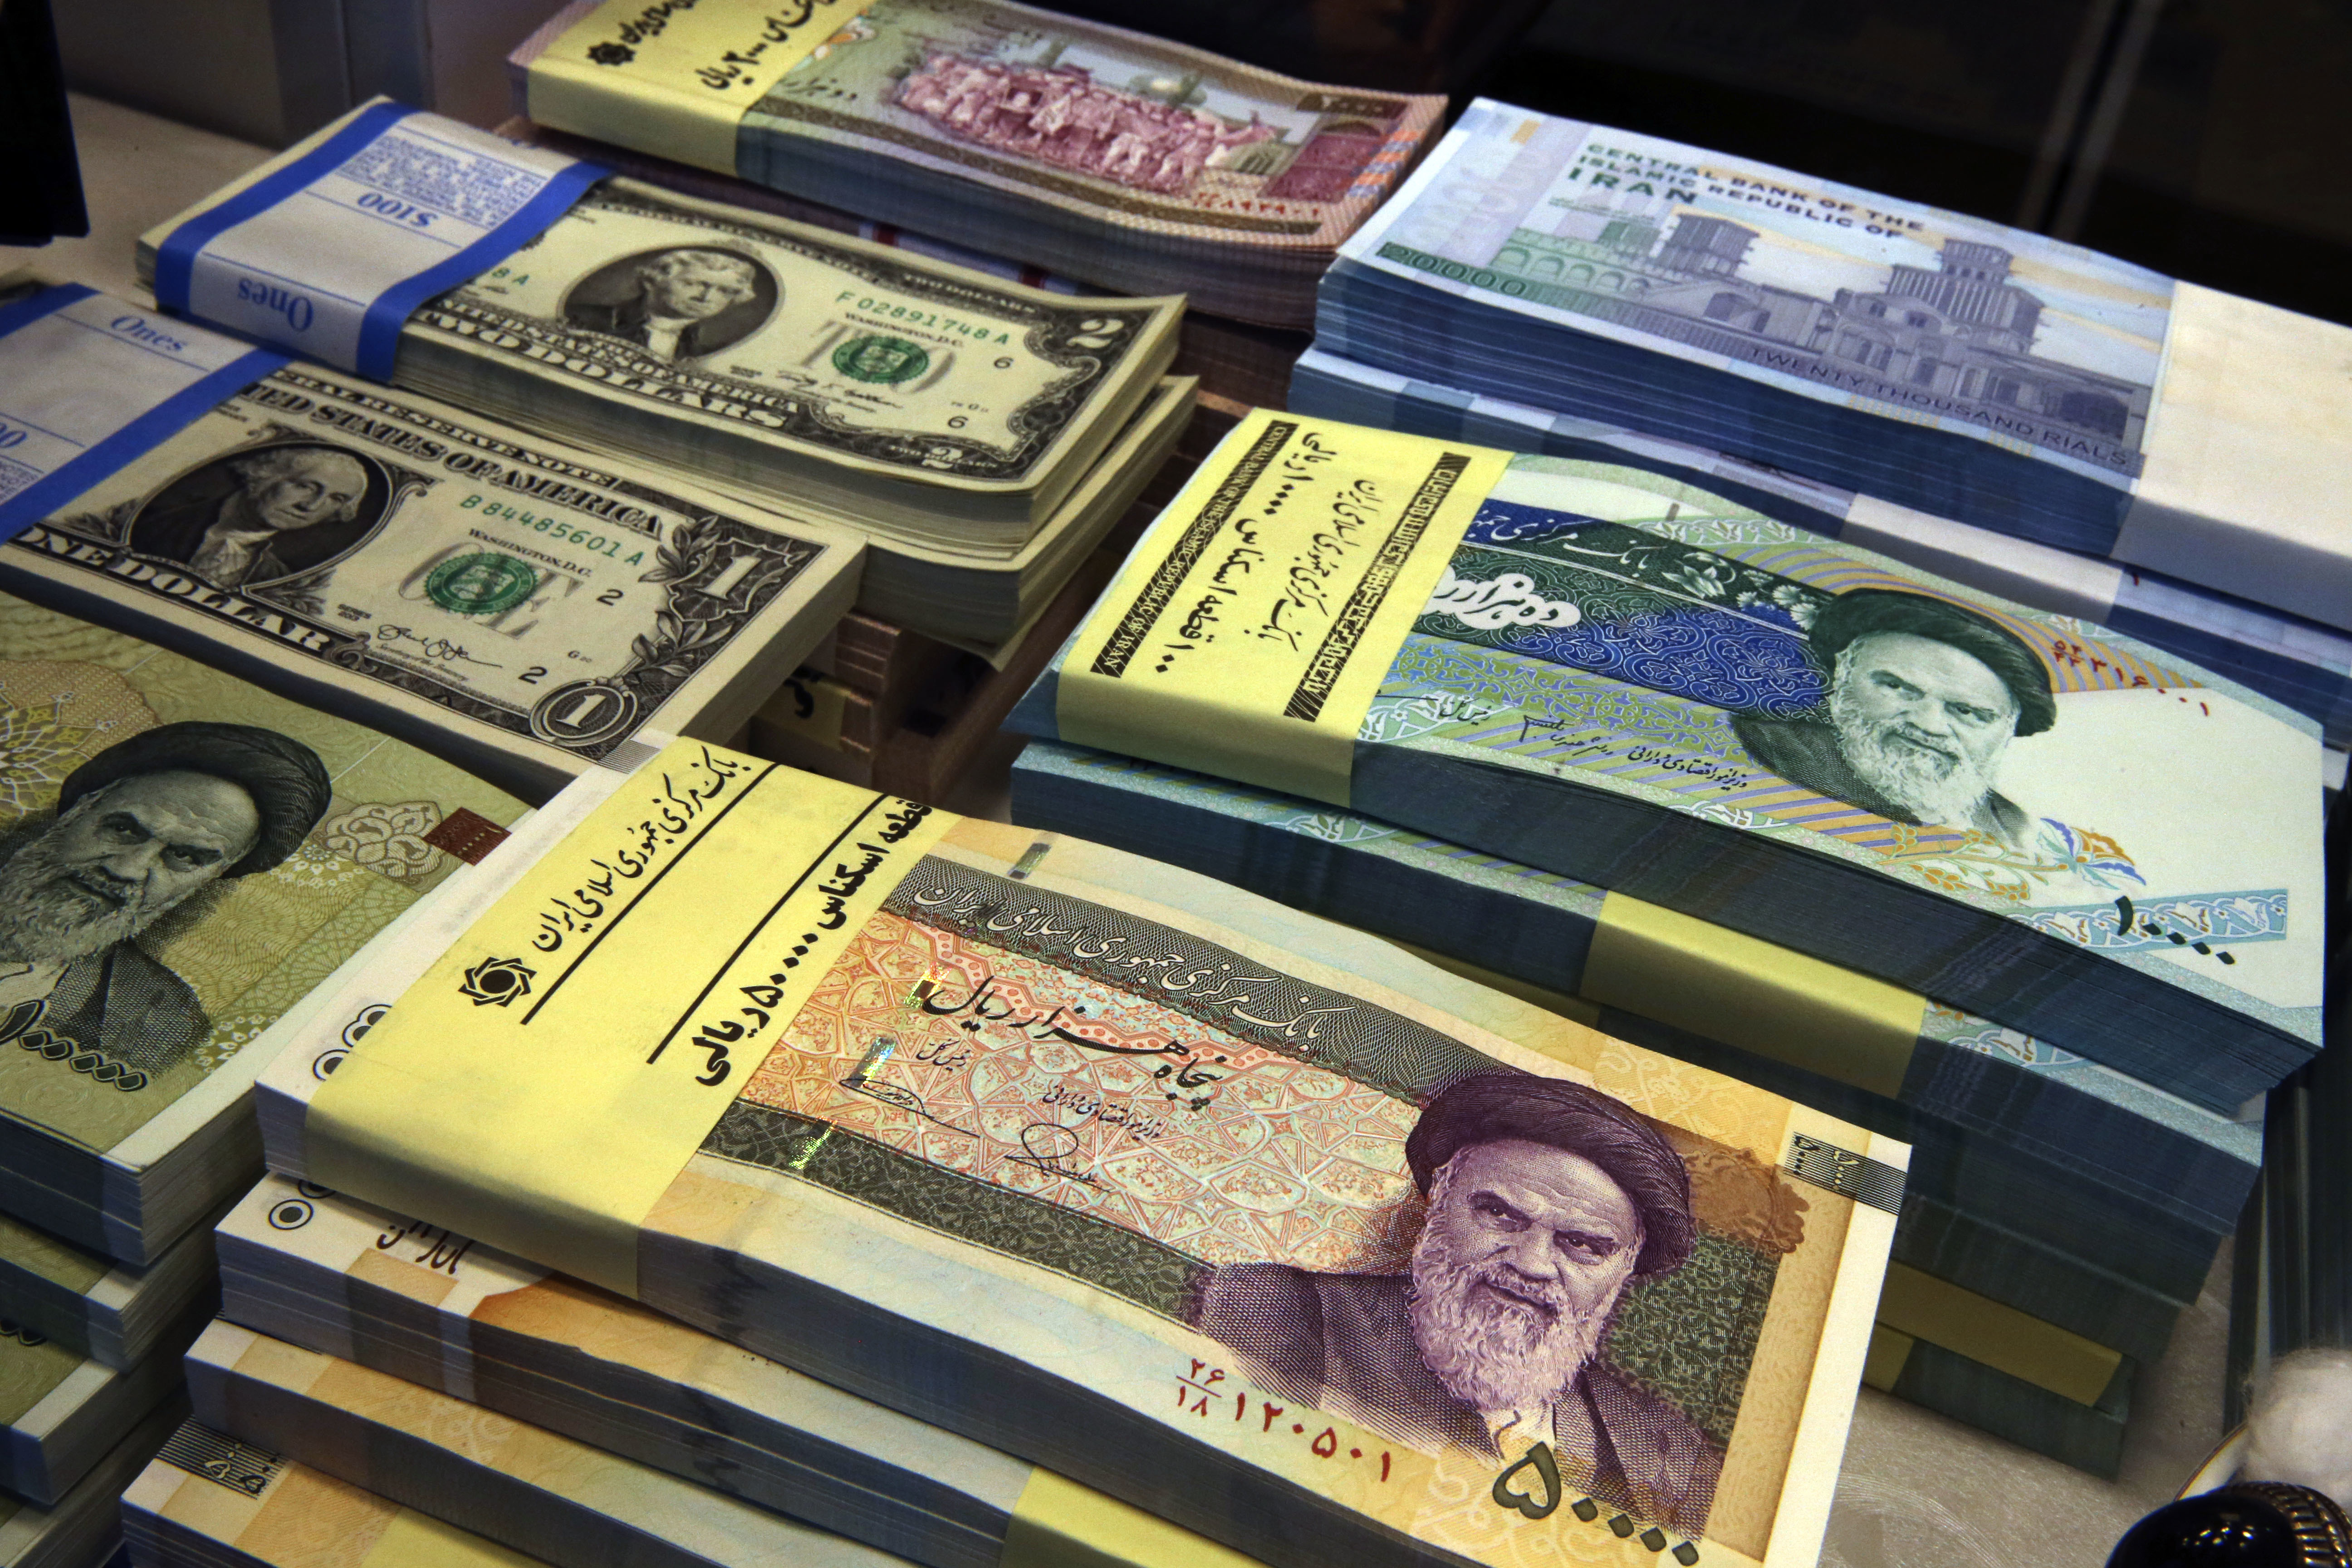 Anatomy of the Iranian Economy